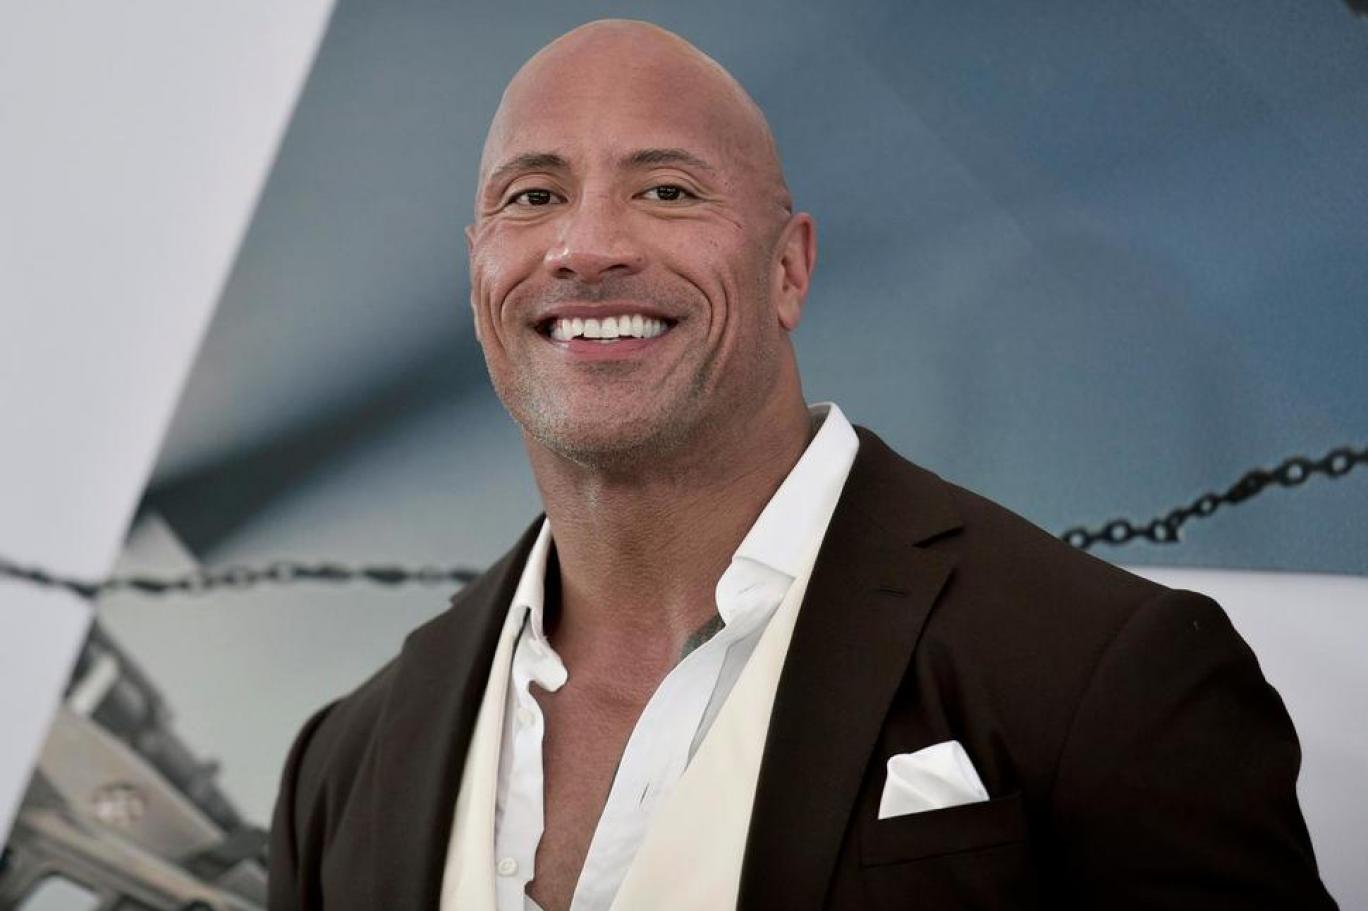 Dwayne 'The Rock' Johnson surprises fans at Madame Tussauds, CinemaCon in  Las Vegas